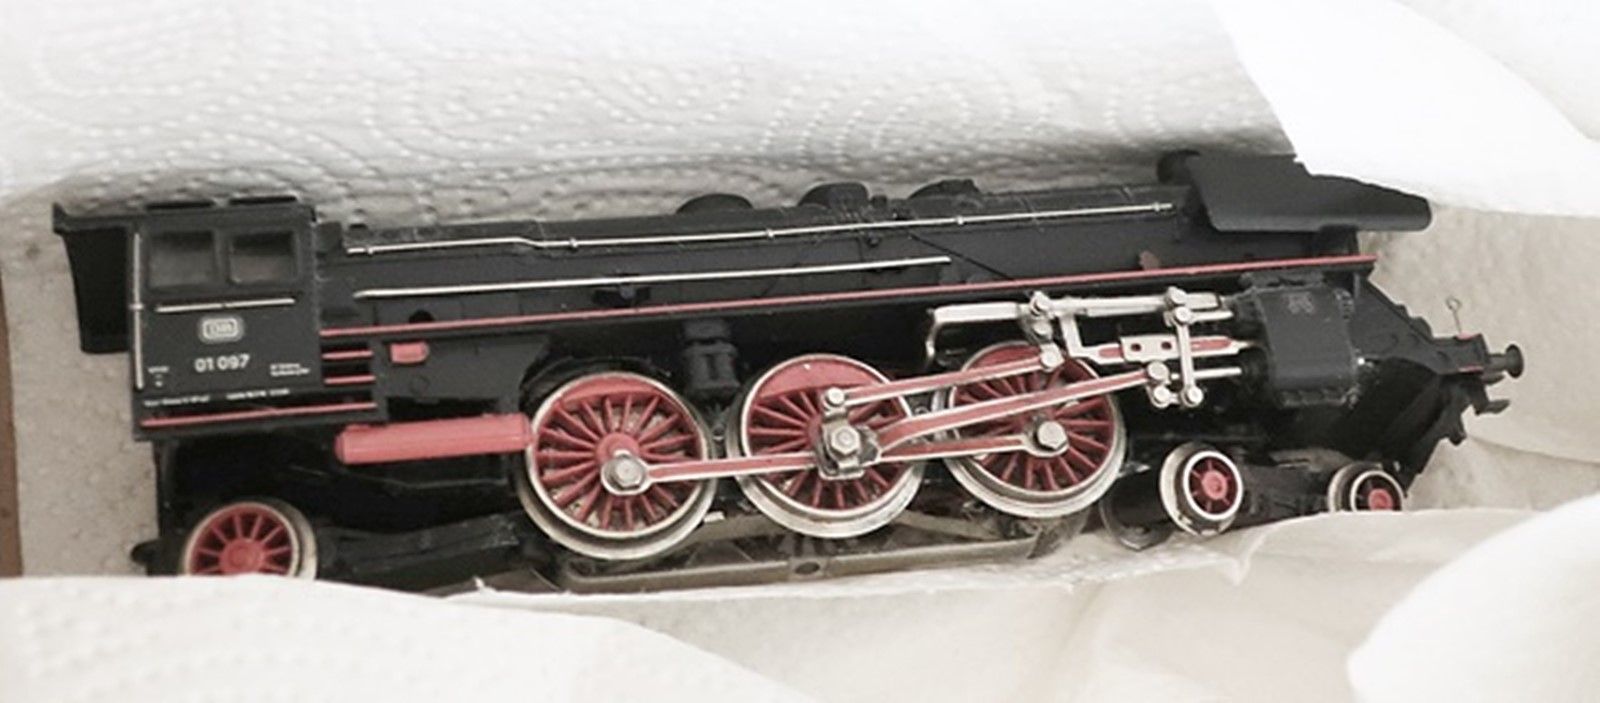 Null Locomotiva Märklin senza scatola di cartone, modello 0197, scartamento H0